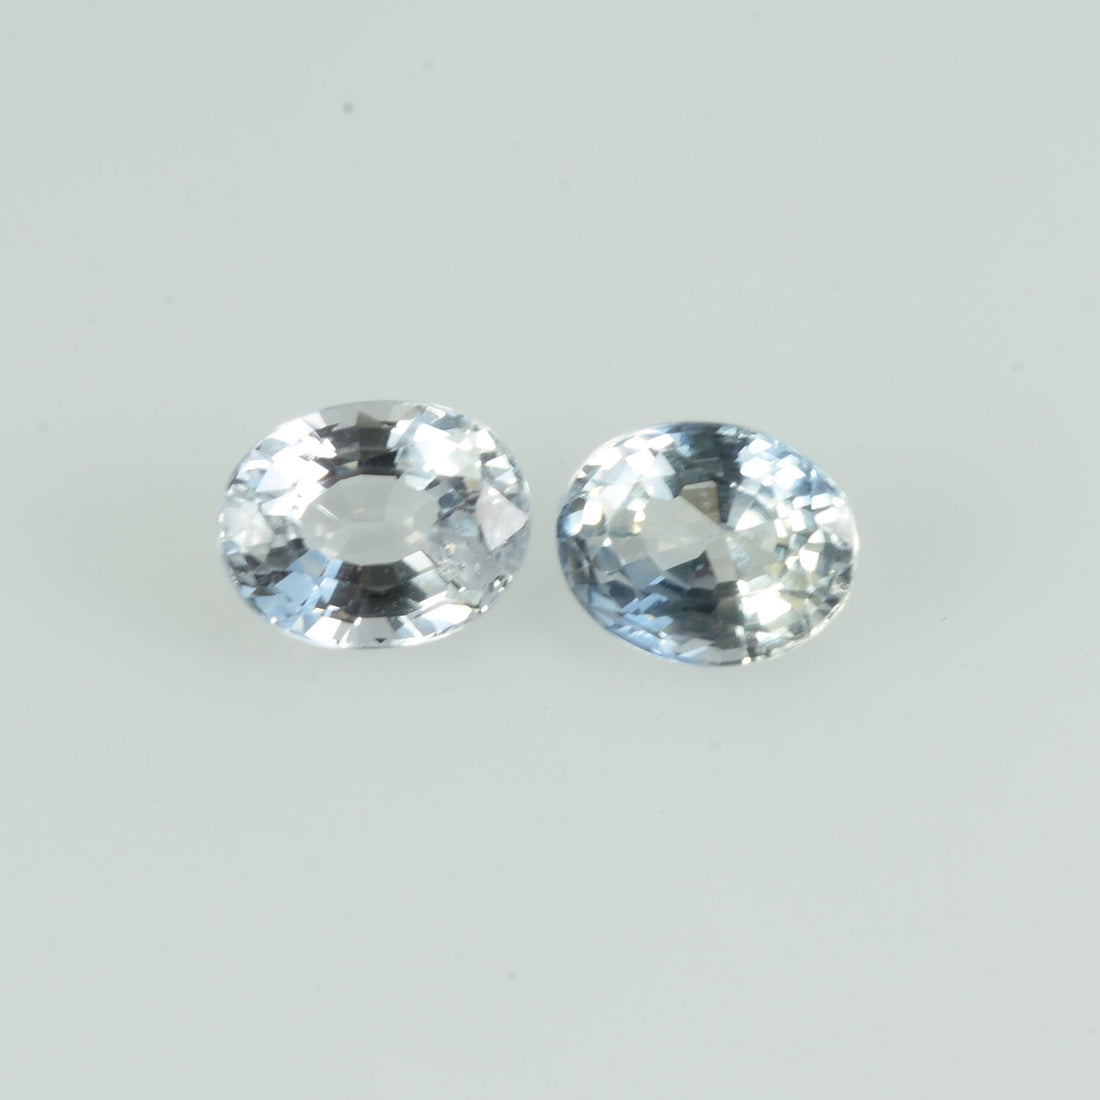 0.72 cts Natural White Sapphire Loose Pair Gemstone Oval Cut - Thai Gems Export Ltd.